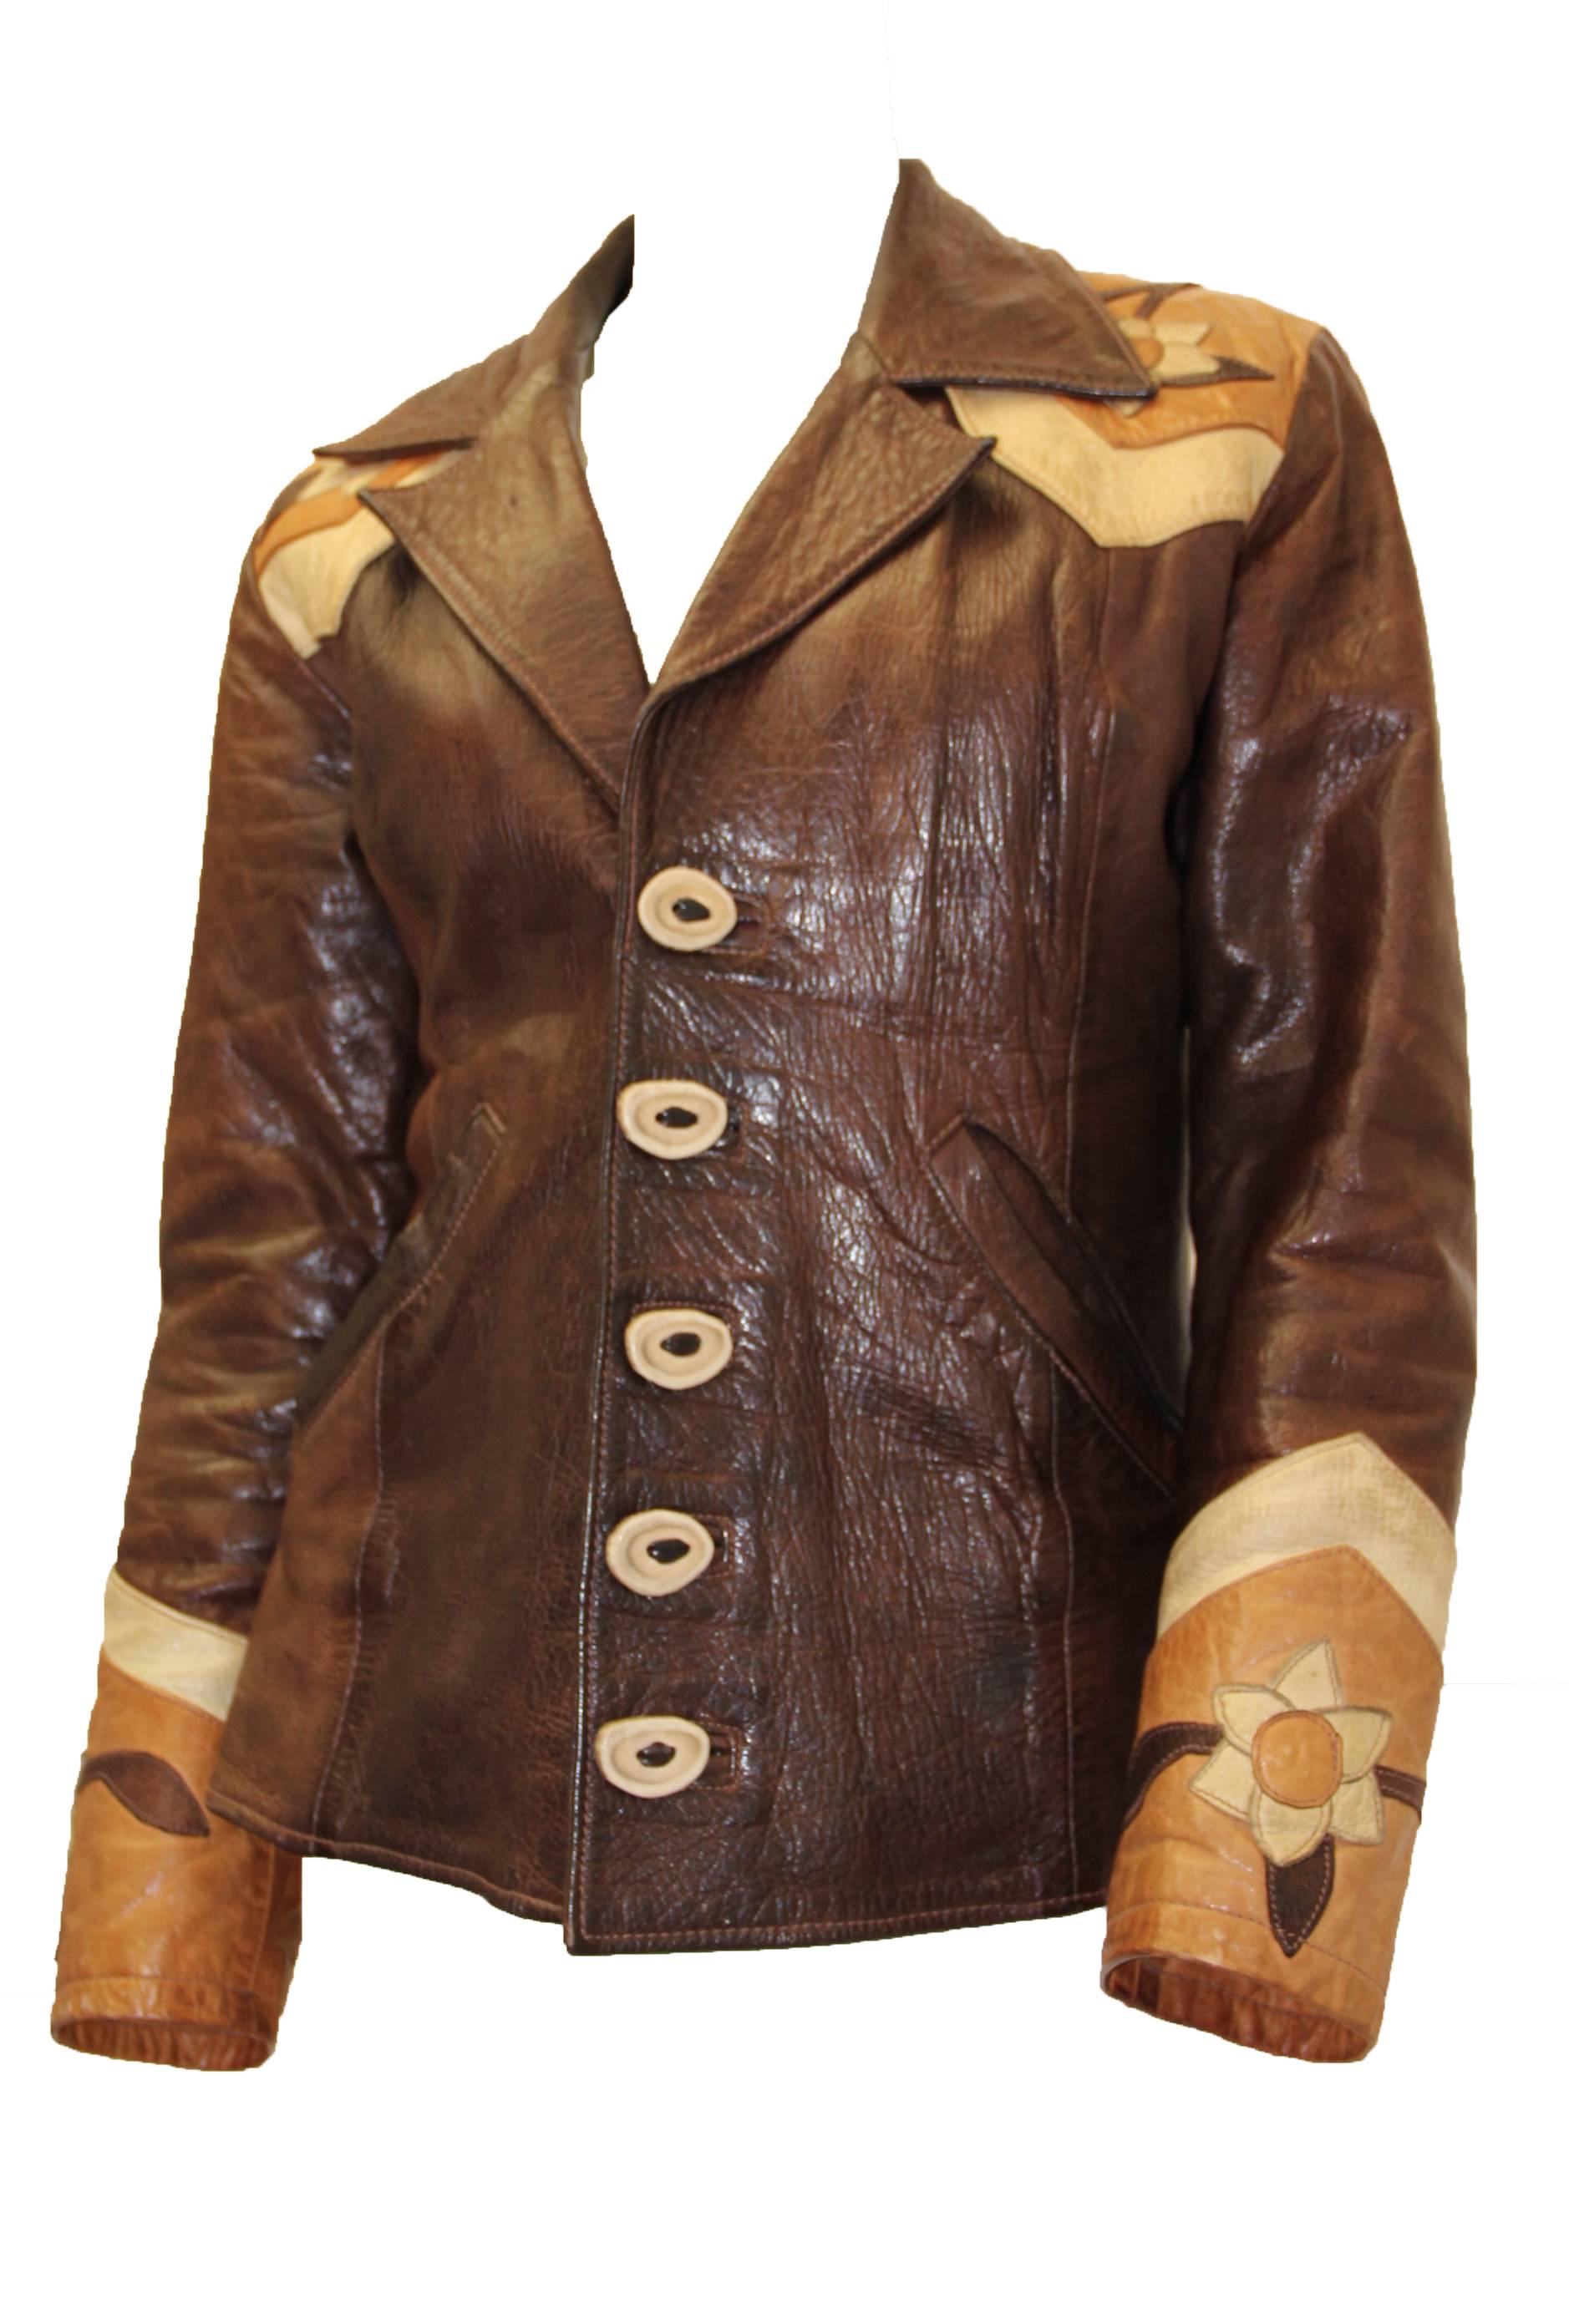 Late 1960s handmade leather jacket. Elk horn buttons. 

Measurements: 
Shoulders: 15